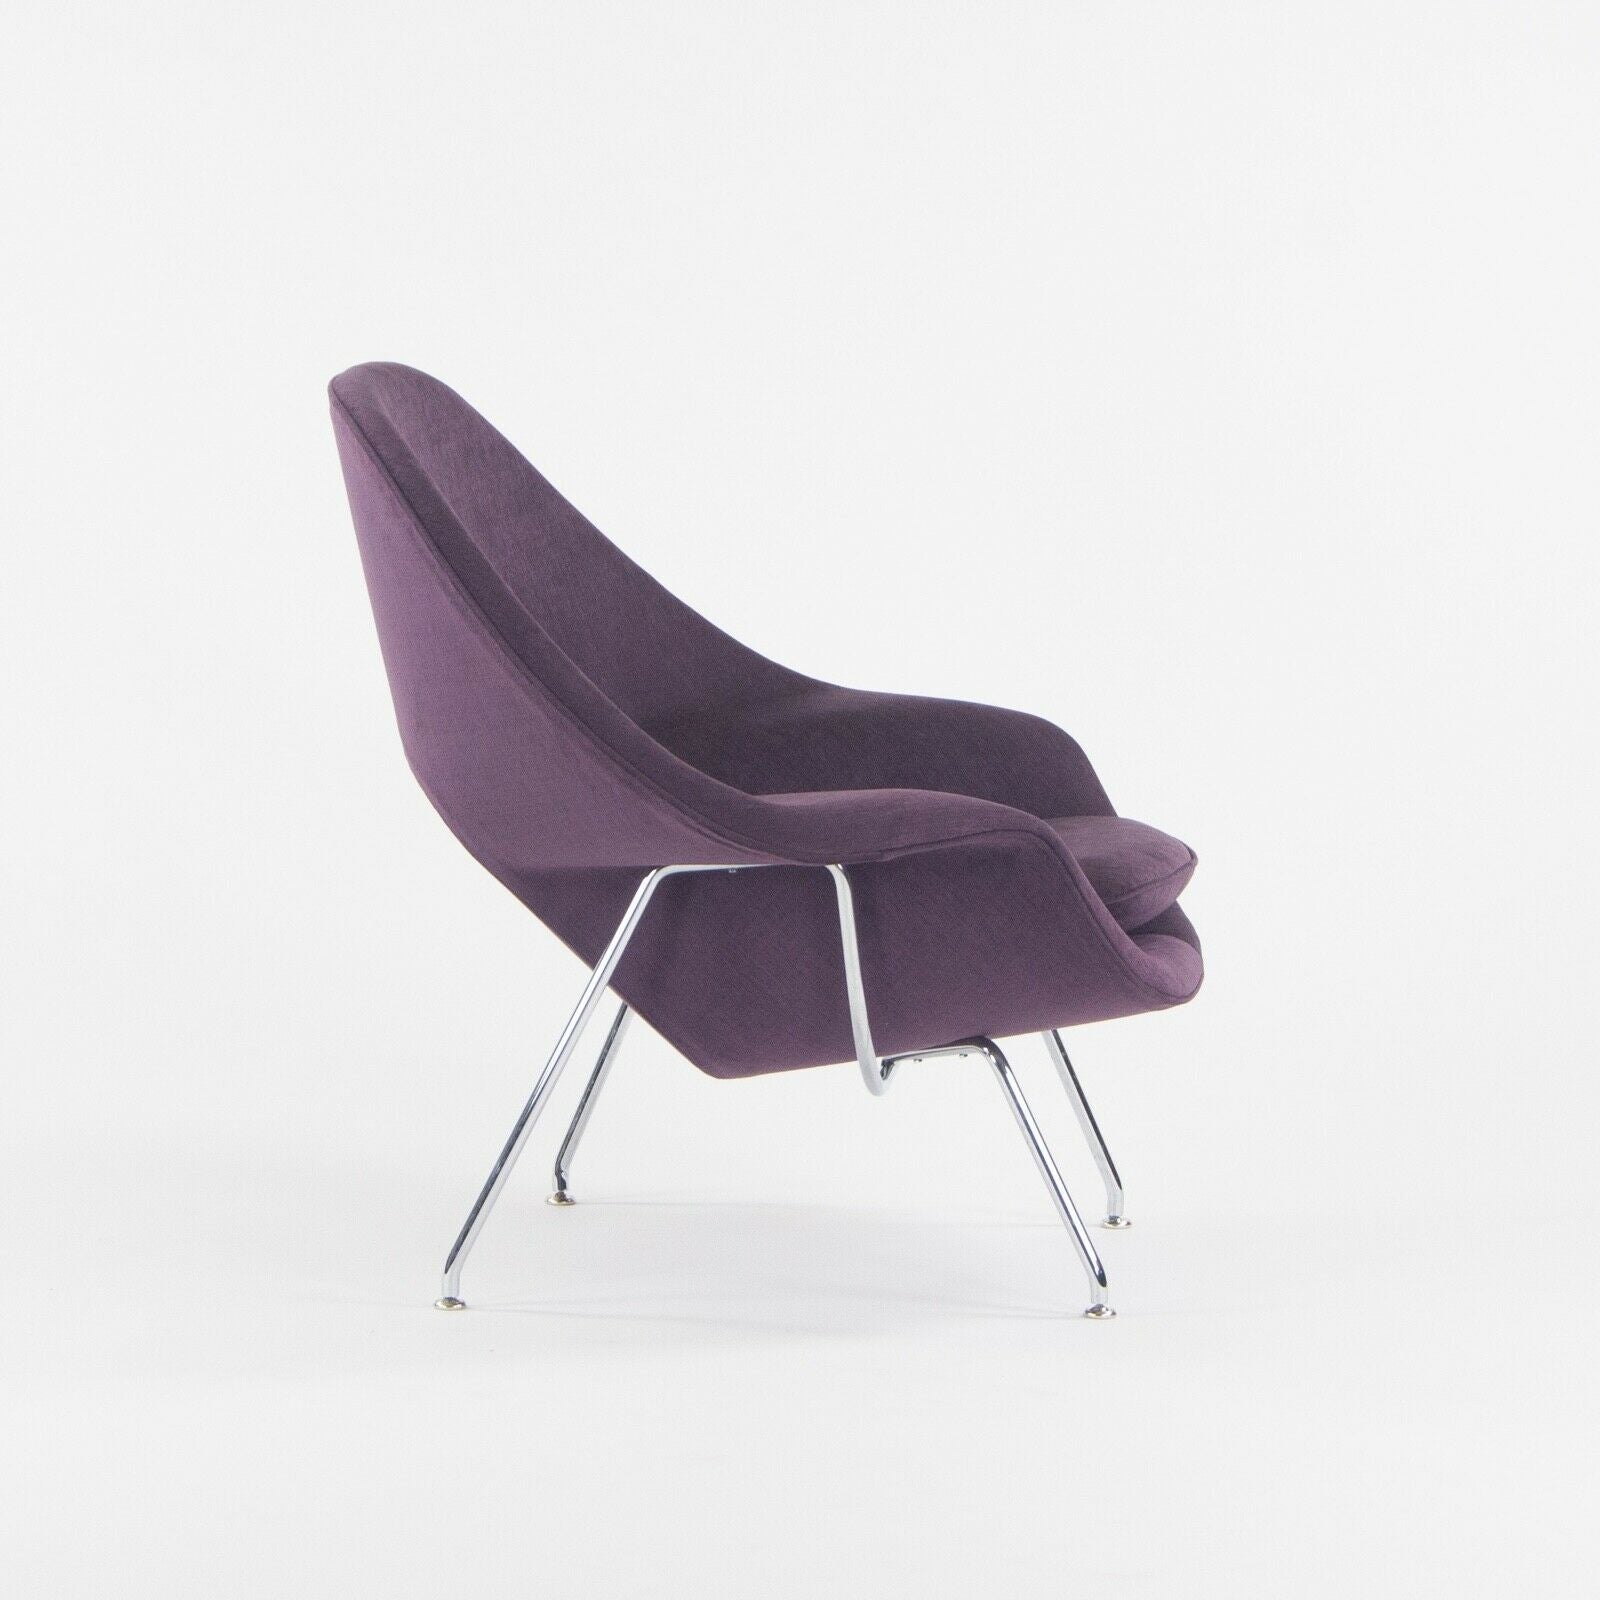 SOLD 2021 Eero Saarinen for Knoll Medium Size Womb Chair w/ Purple Summit Fabric